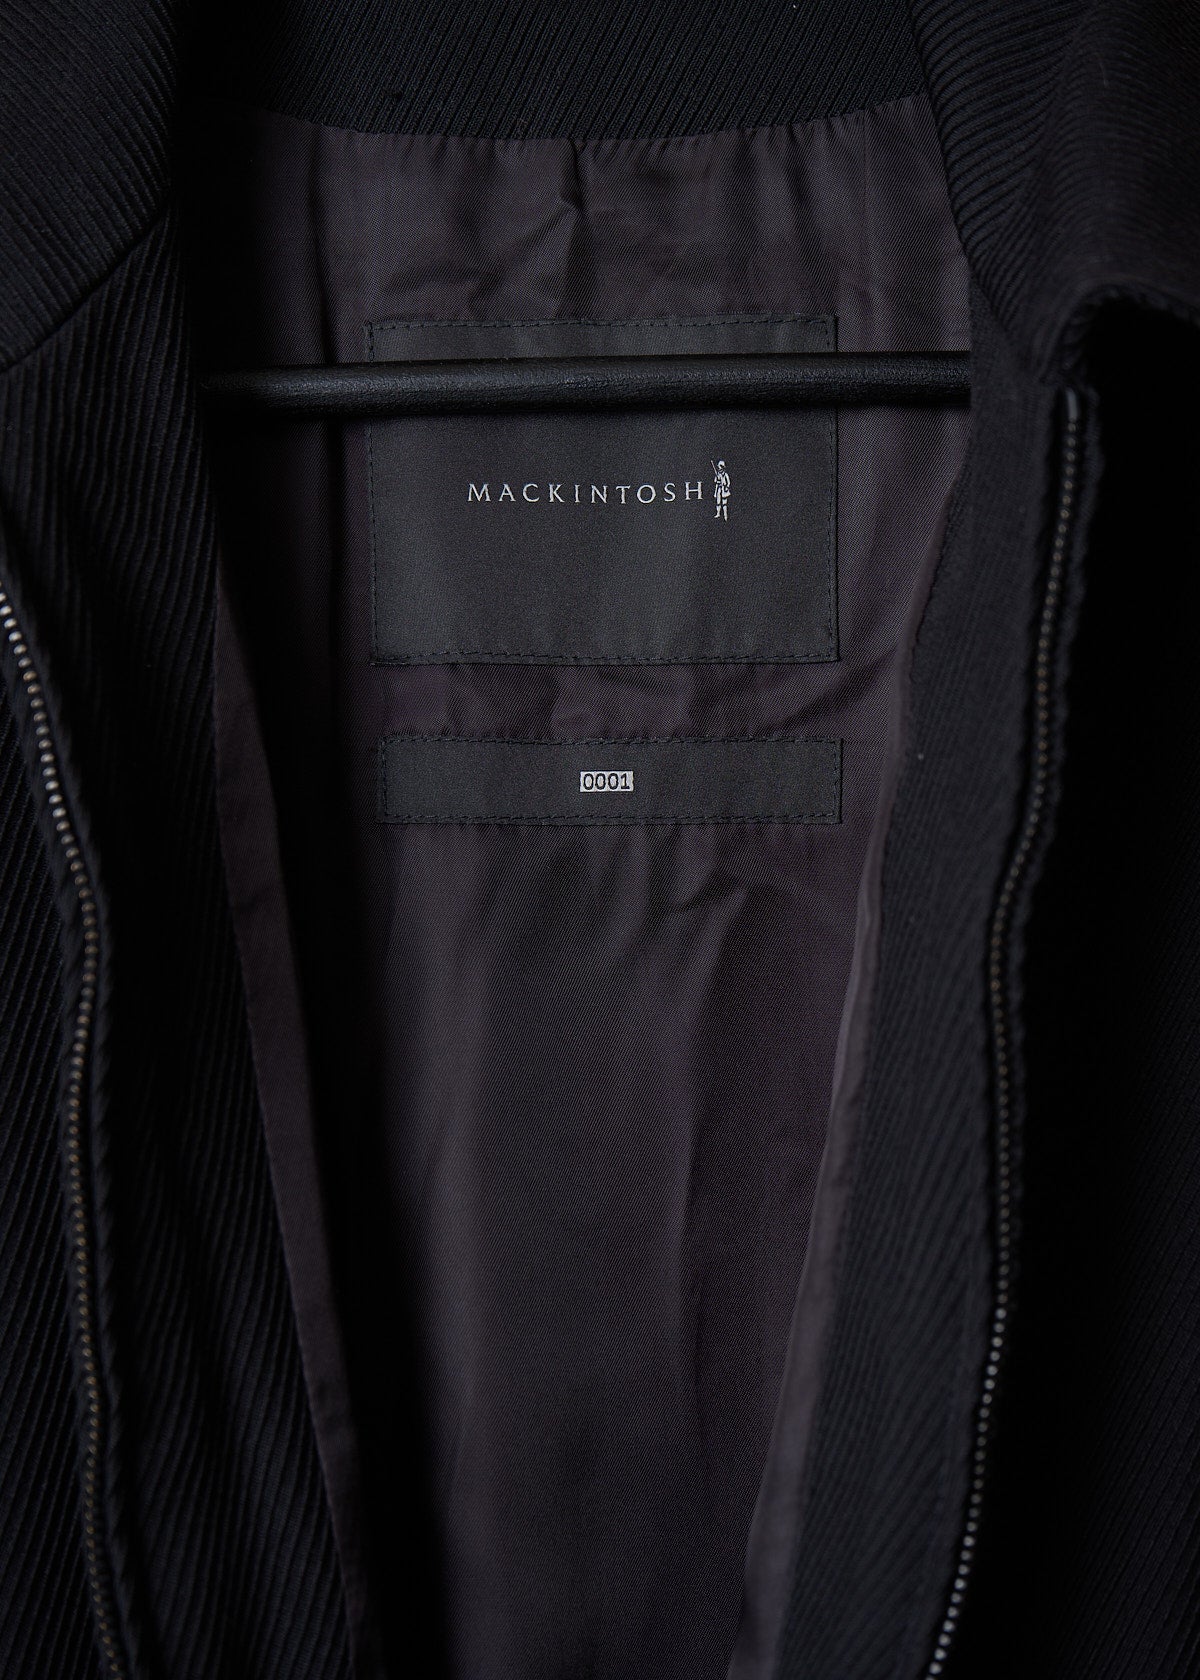 Mackintosh/Kiko Kostadinov 001 Black Long Coat 2017 - Large